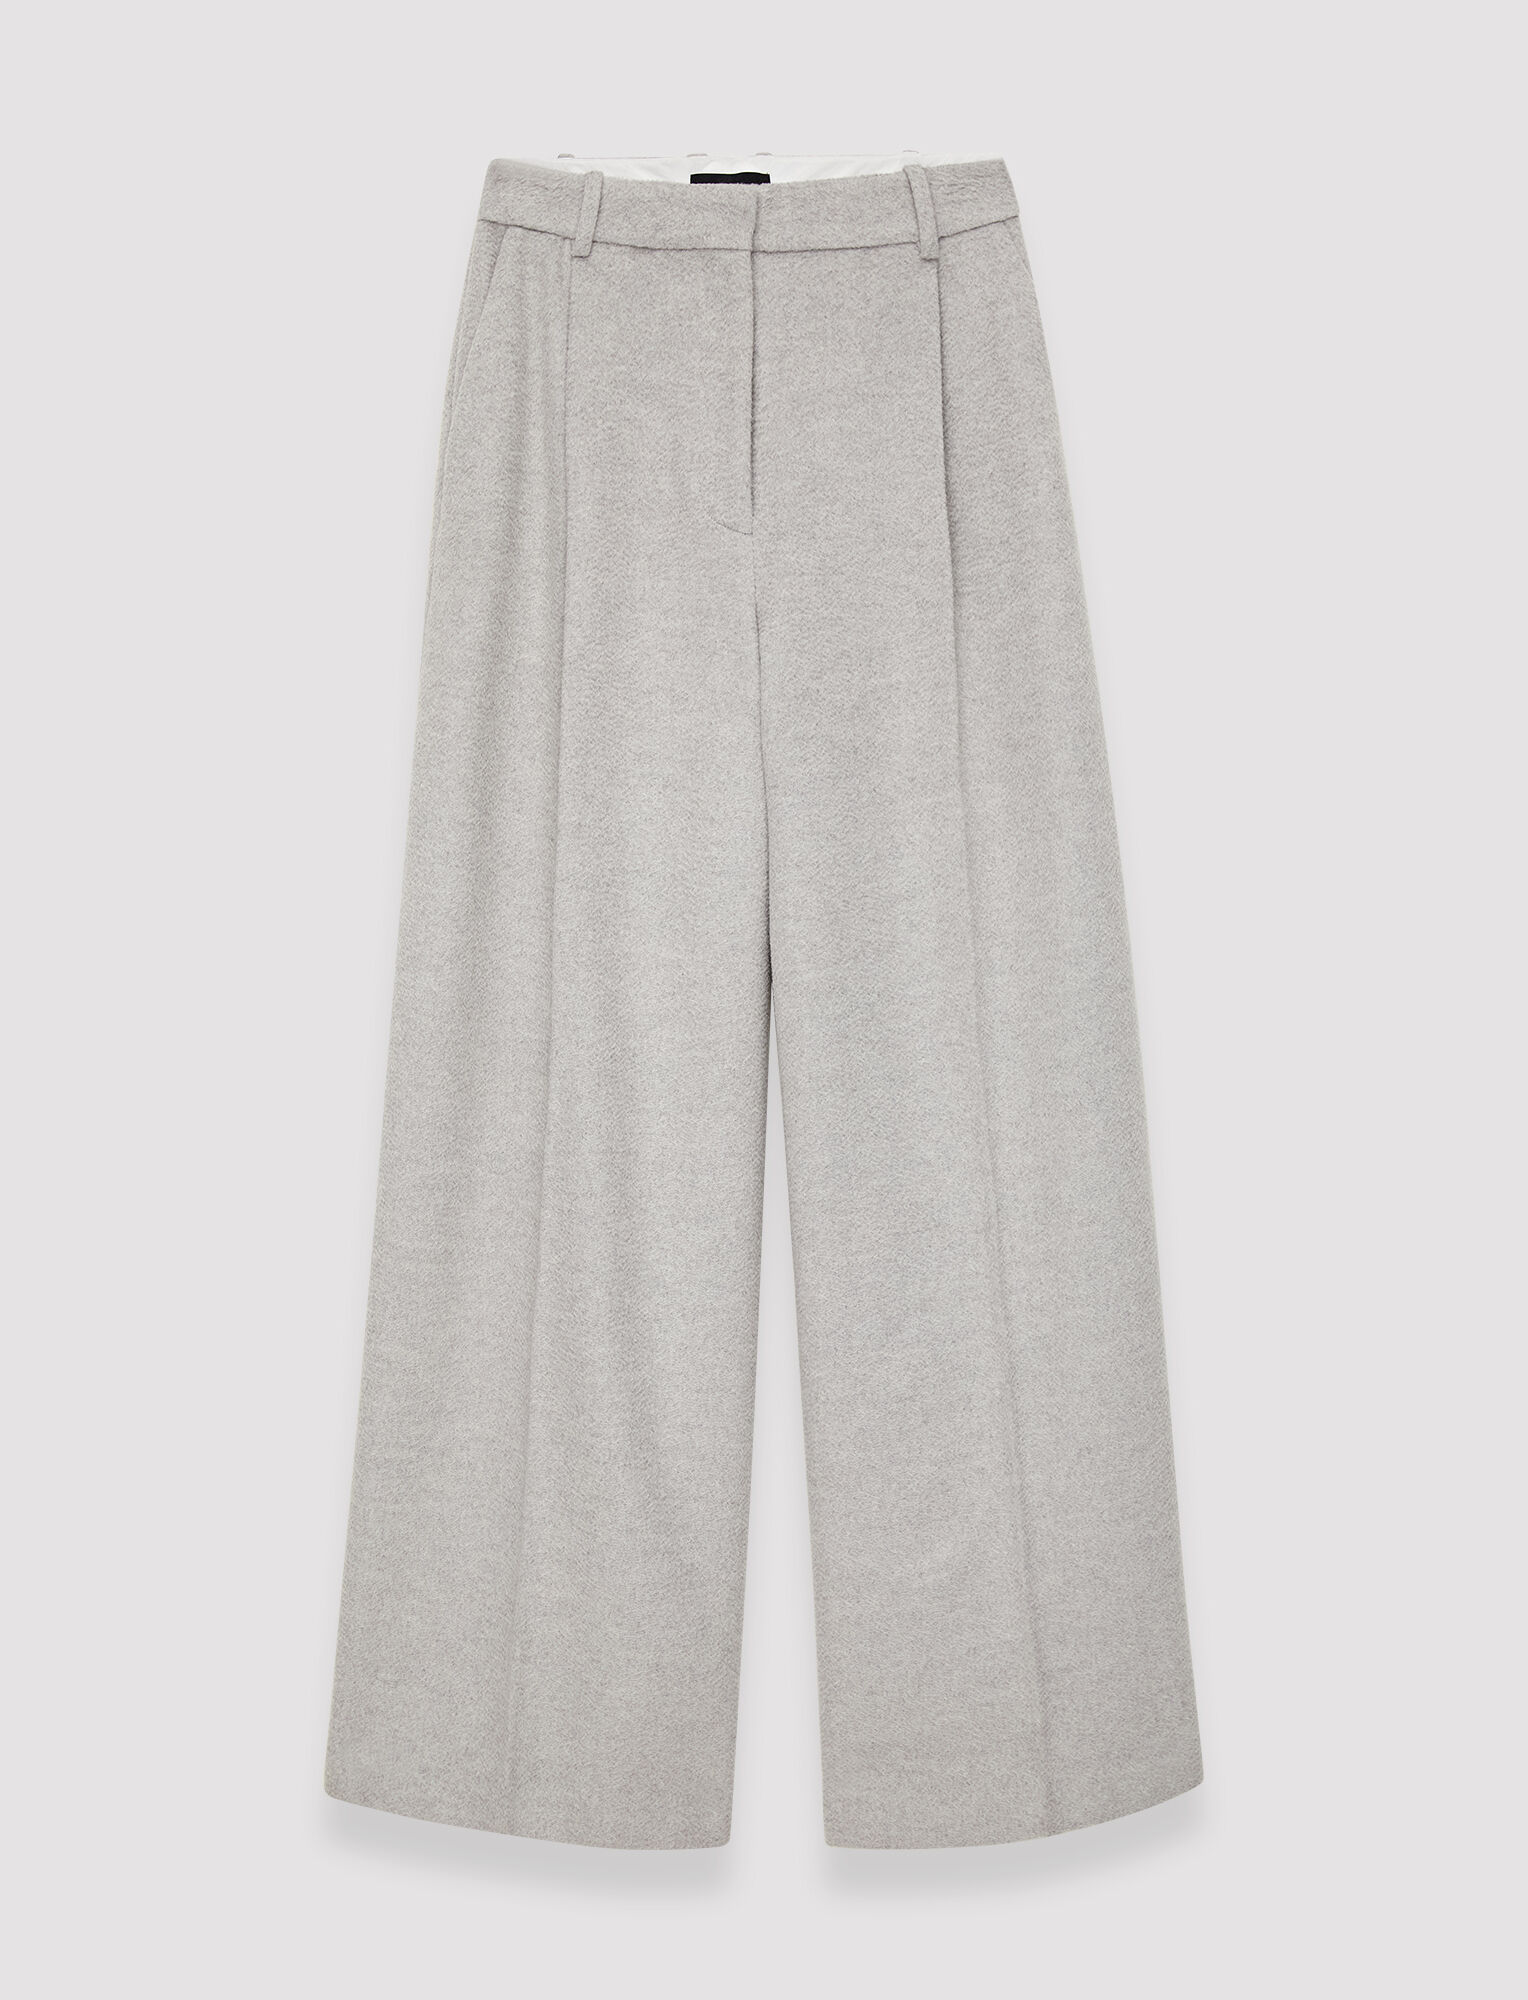 Joseph, Watermark Wool Primrose Trousers, in Light Grey Melange